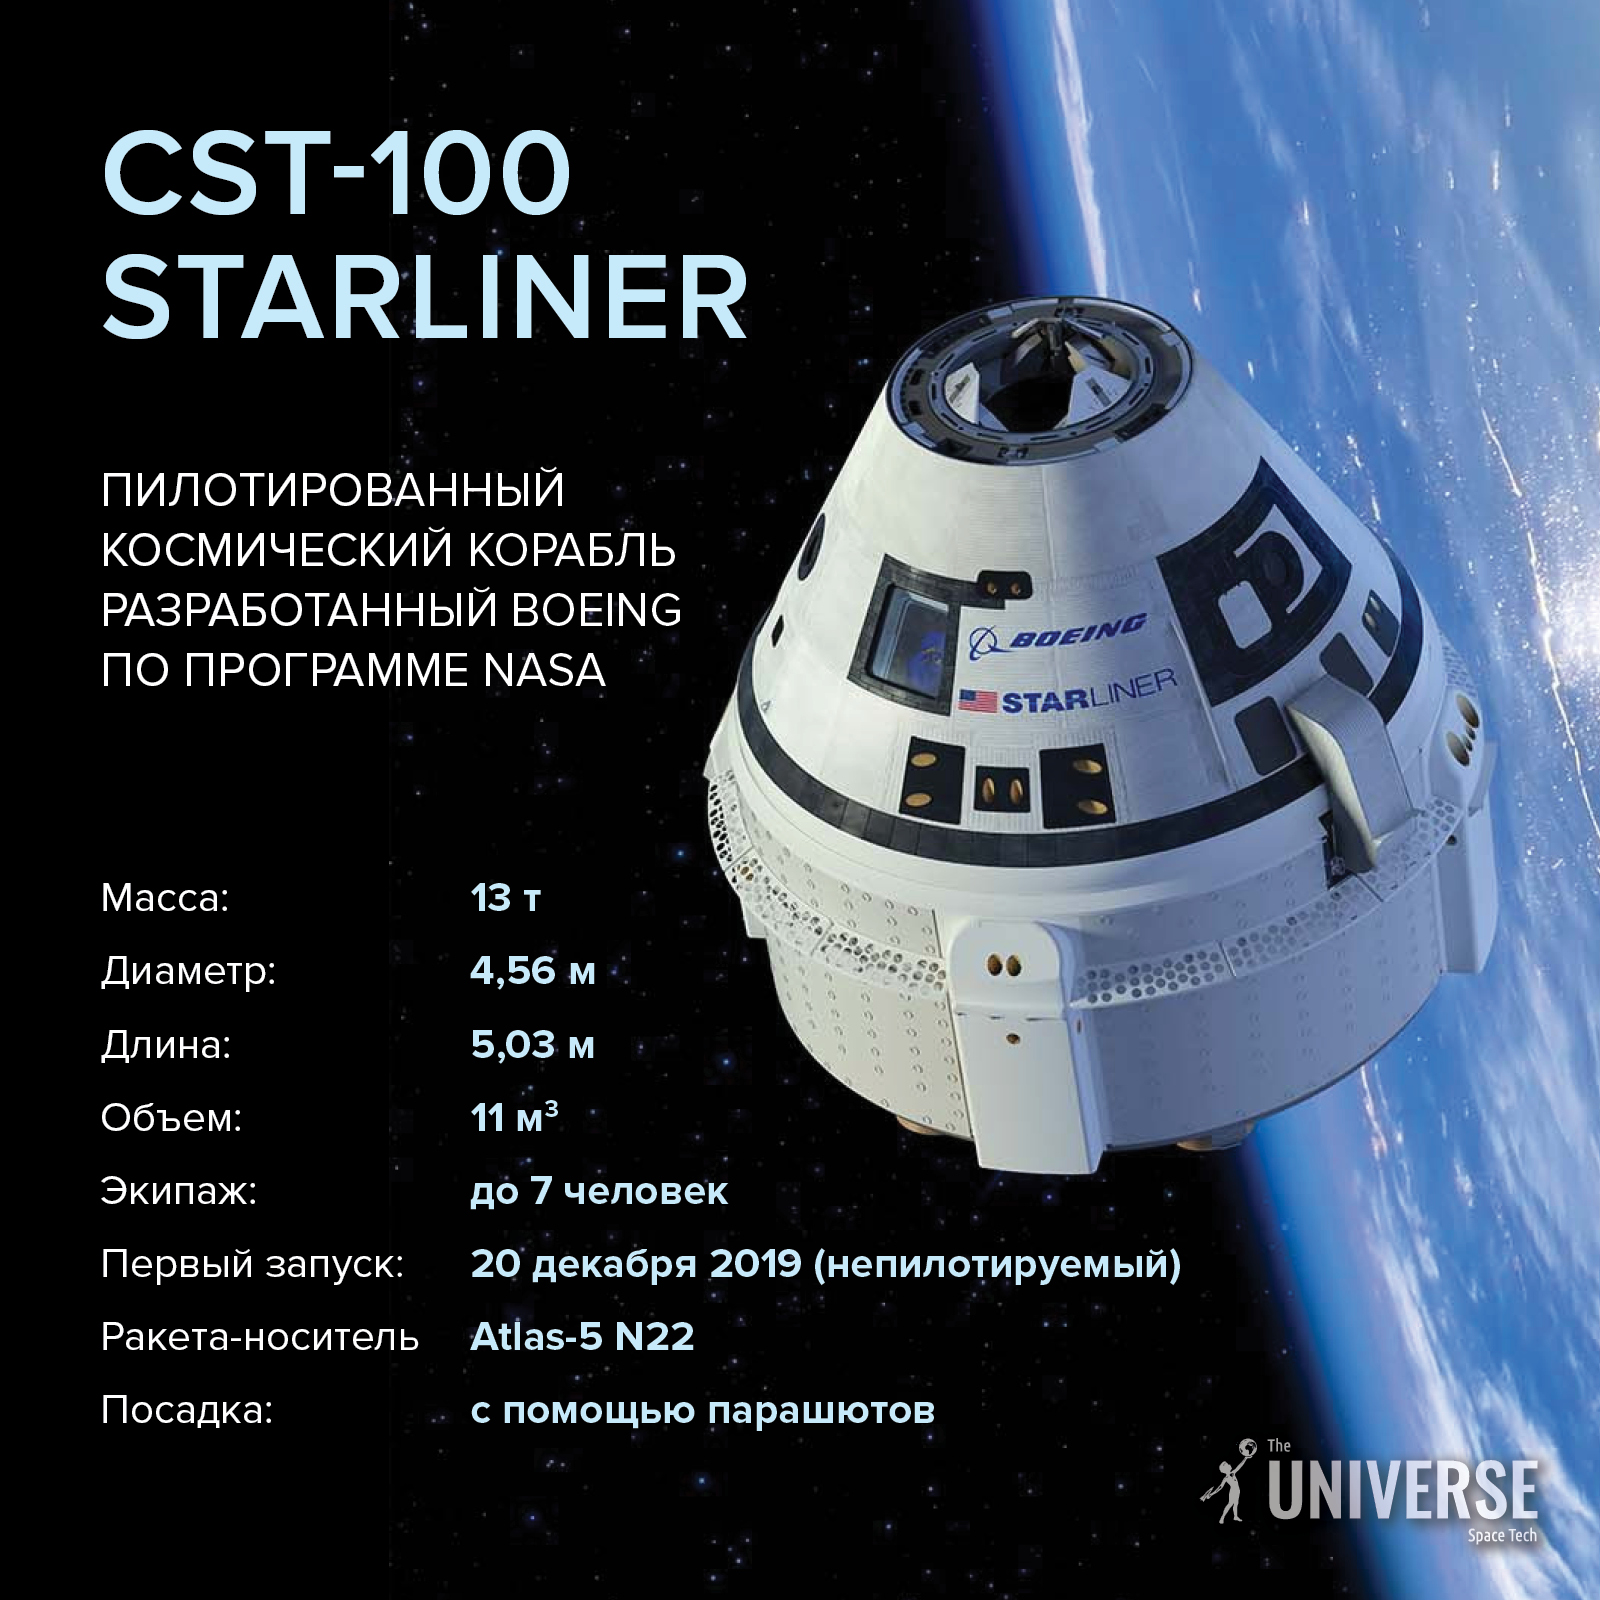 Основные характеристики CST-100 Starliner